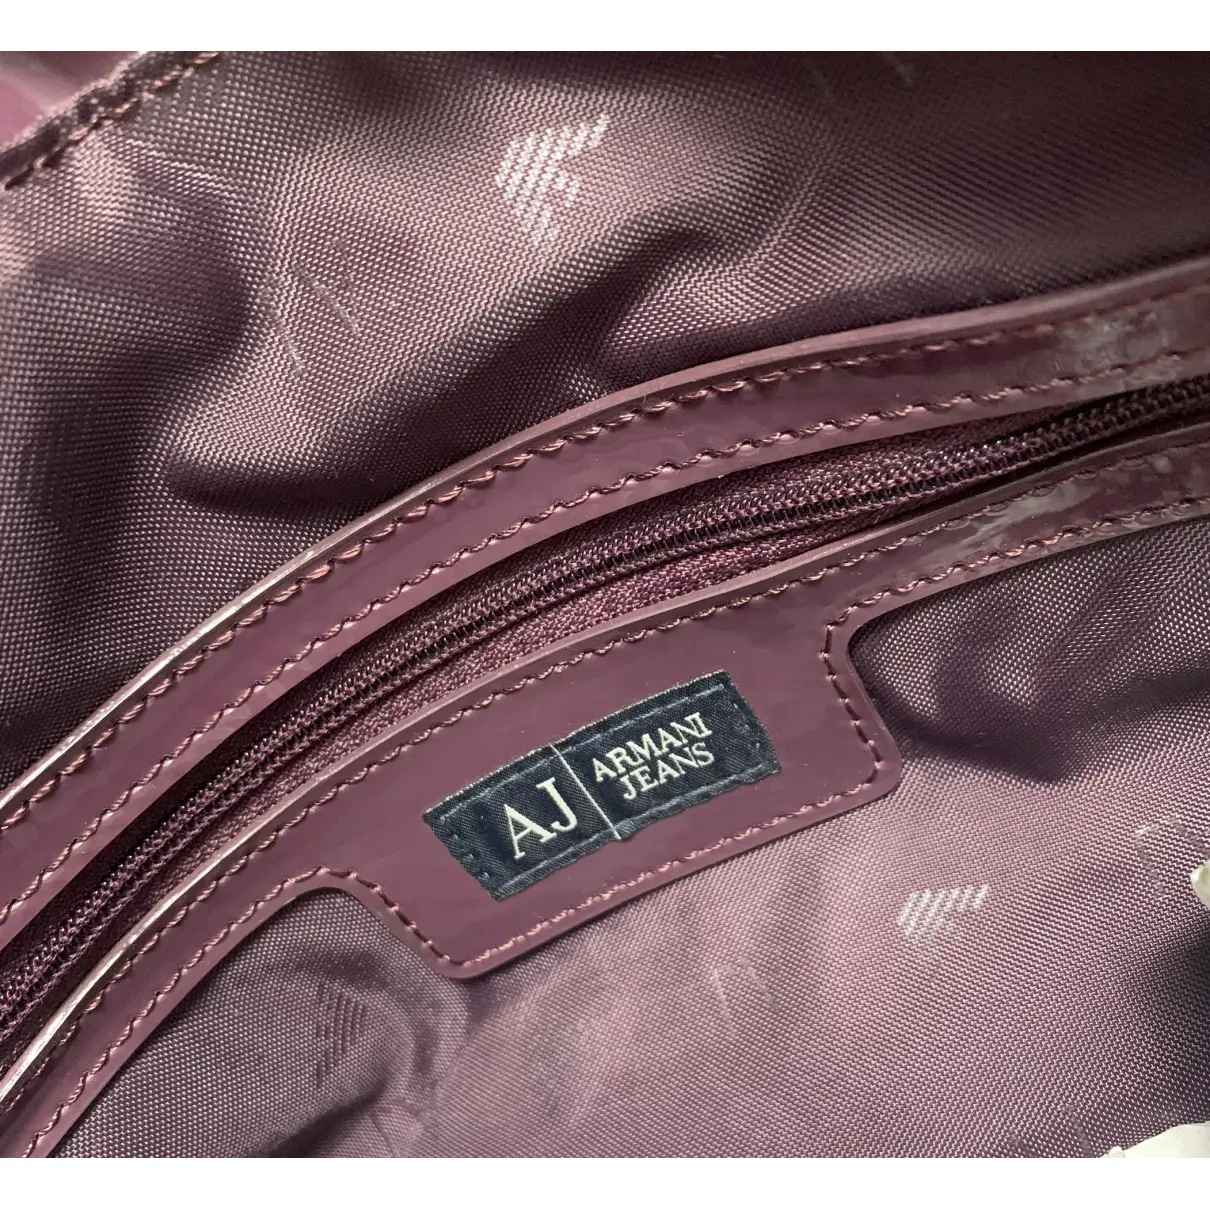 Buy Armani Jeans Patent leather handbag online